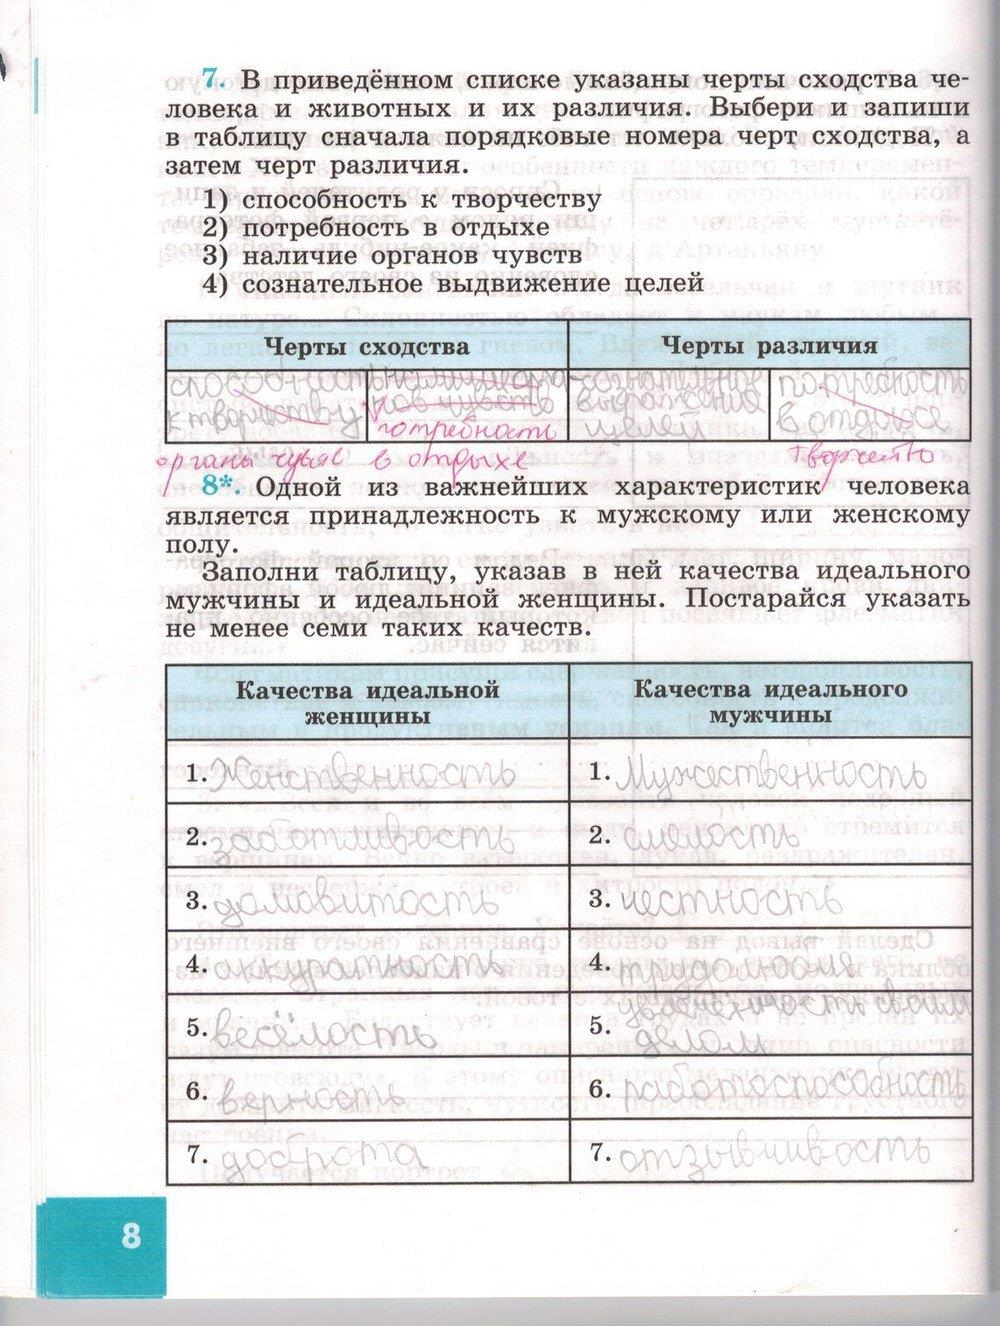 гдз 5 класс рабочая тетрадь страница 8 обществознание Иванова, Хотеенкова